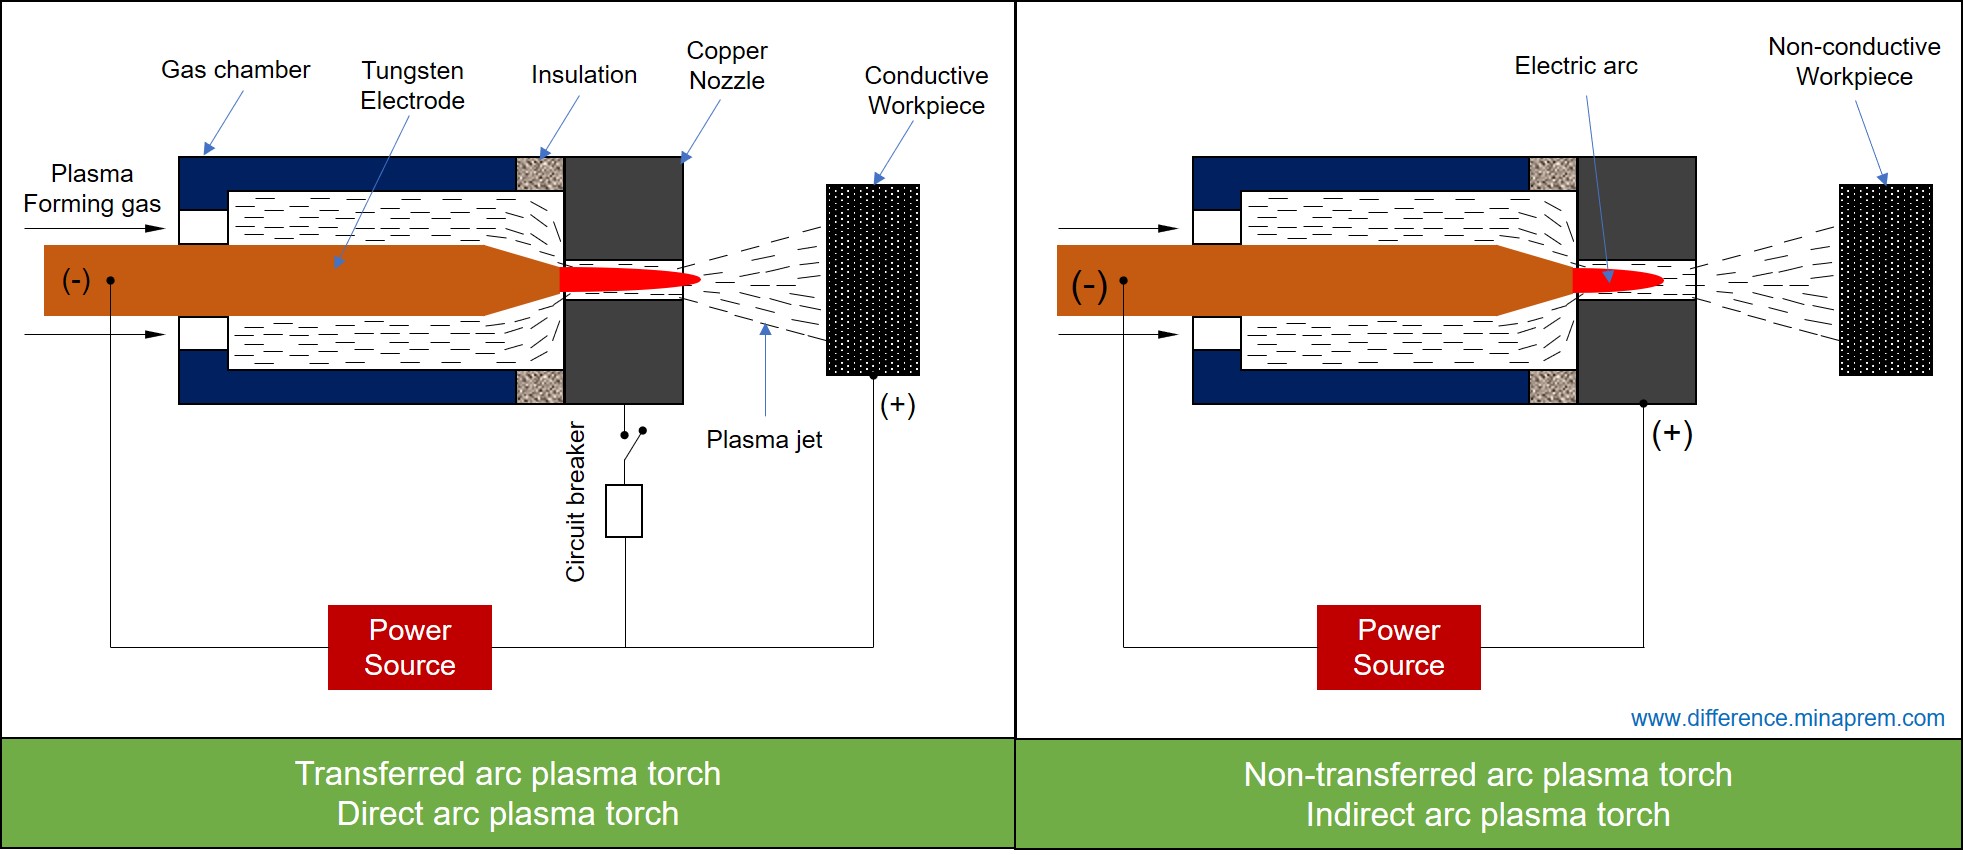 Transferred arc and non-transferred arc plasma torch or direct arc plasma torch and indirect arc plasma torch